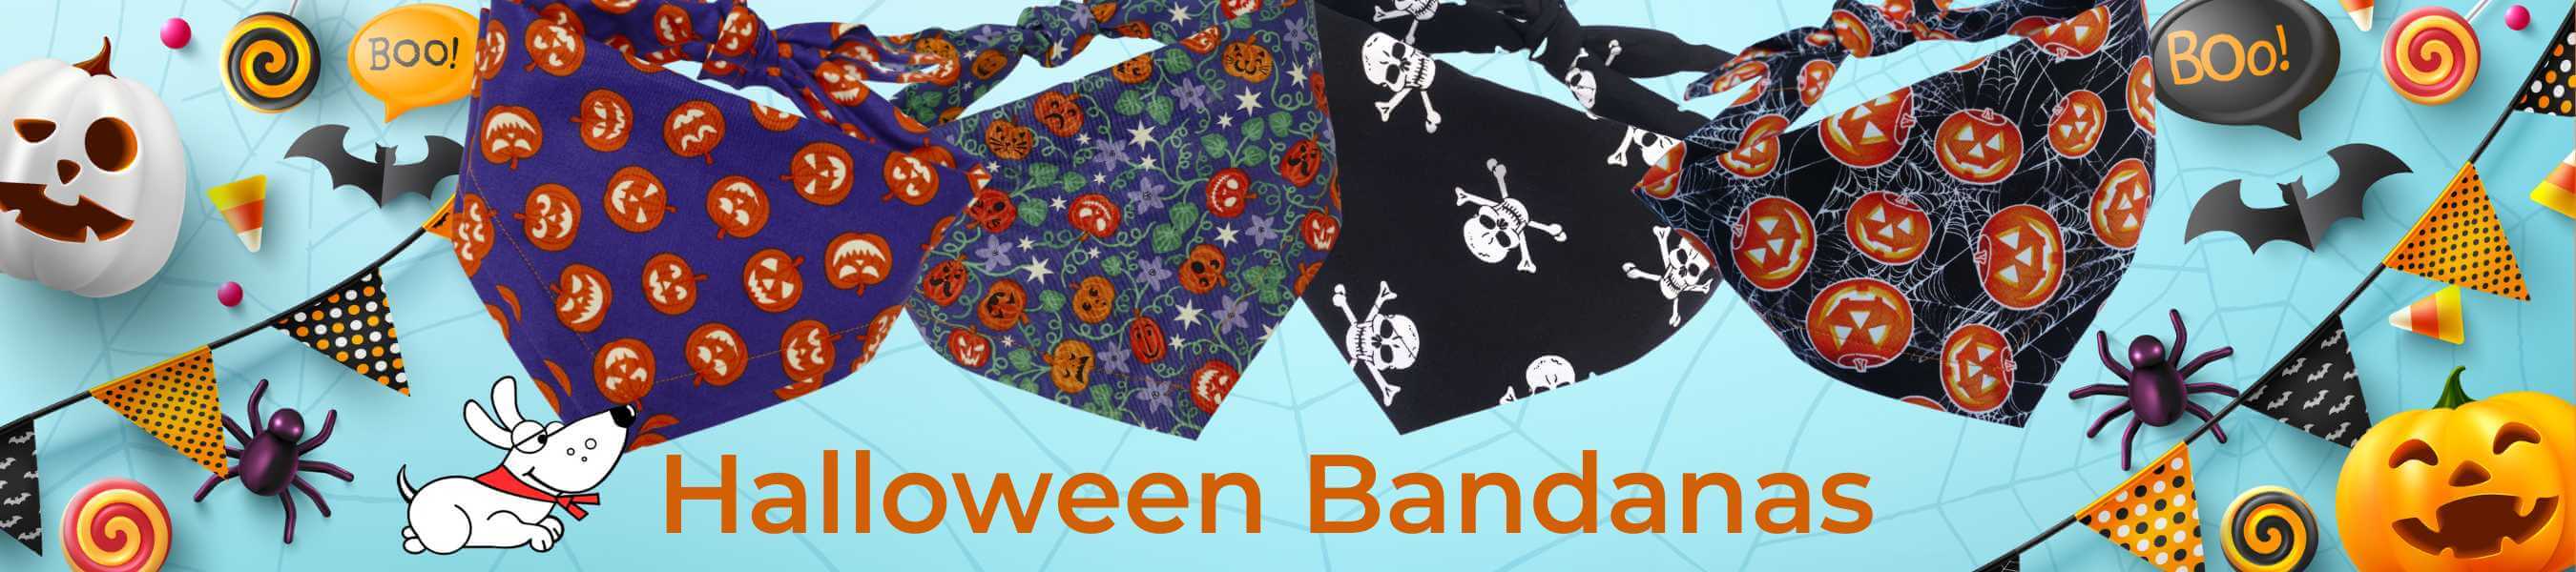 halloween dog bandanas at dudiedog bandanas uk spooky dog accessories